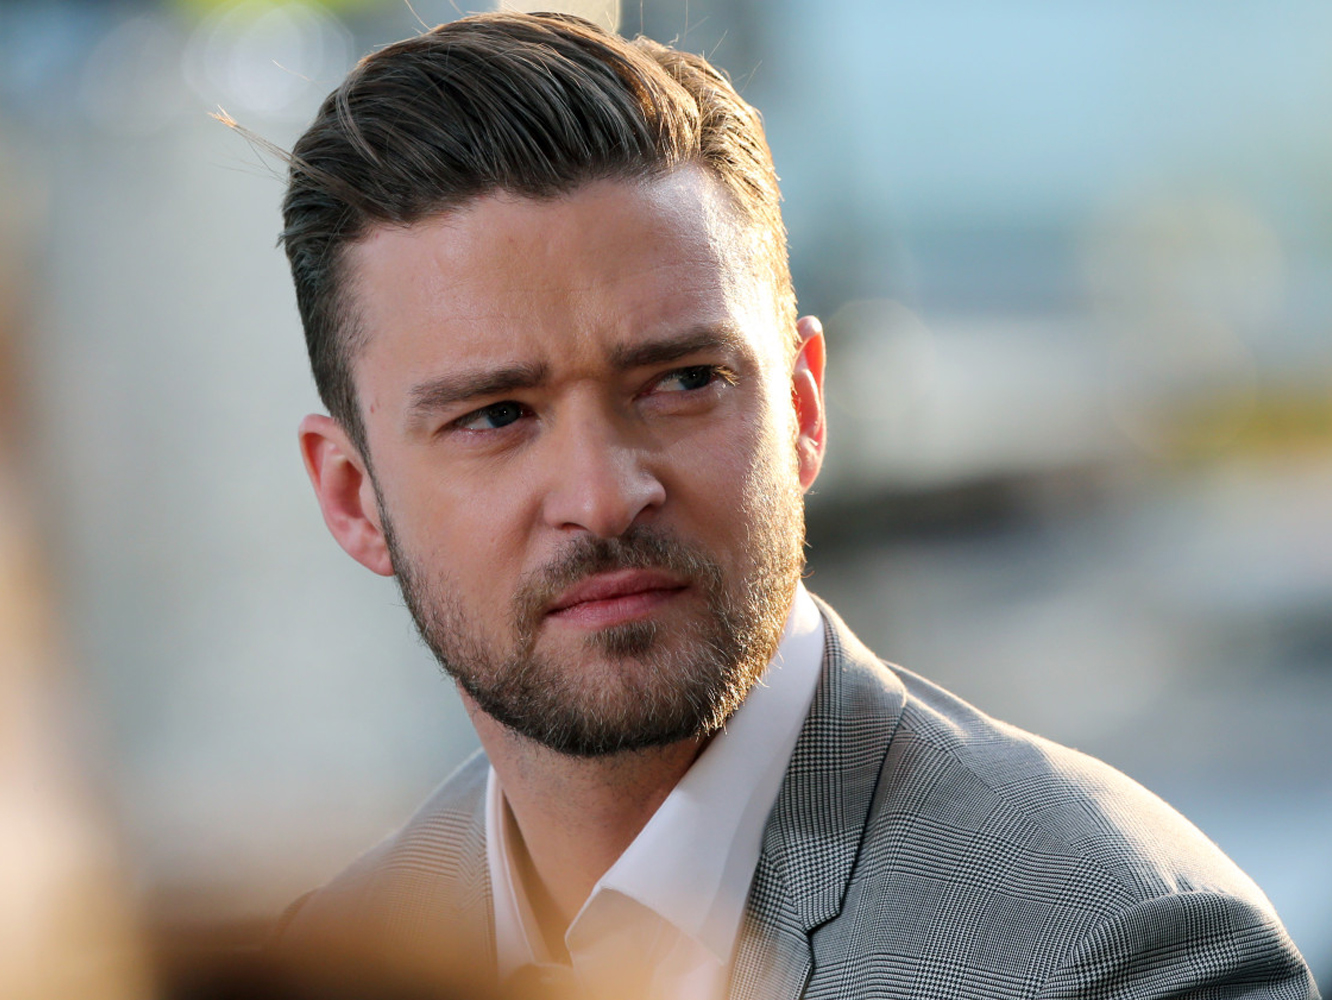  A Justin Timberlake se le va a atragantar la Super Bowl: ni Janet Jackson ni Nsync estarán allí